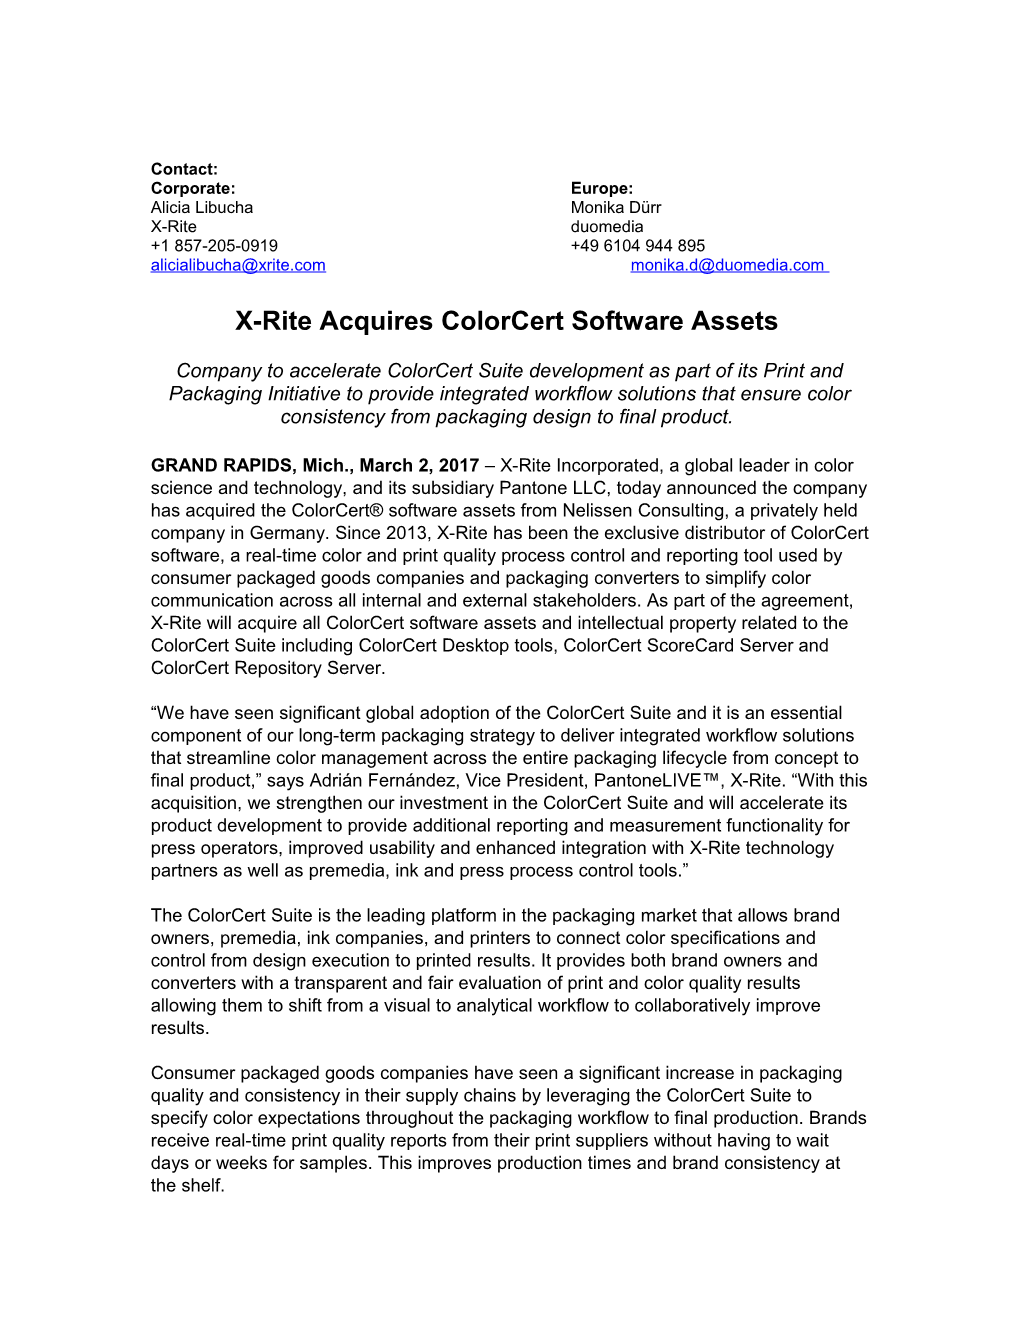 X-Rite Acquires Colorcert Software Assets